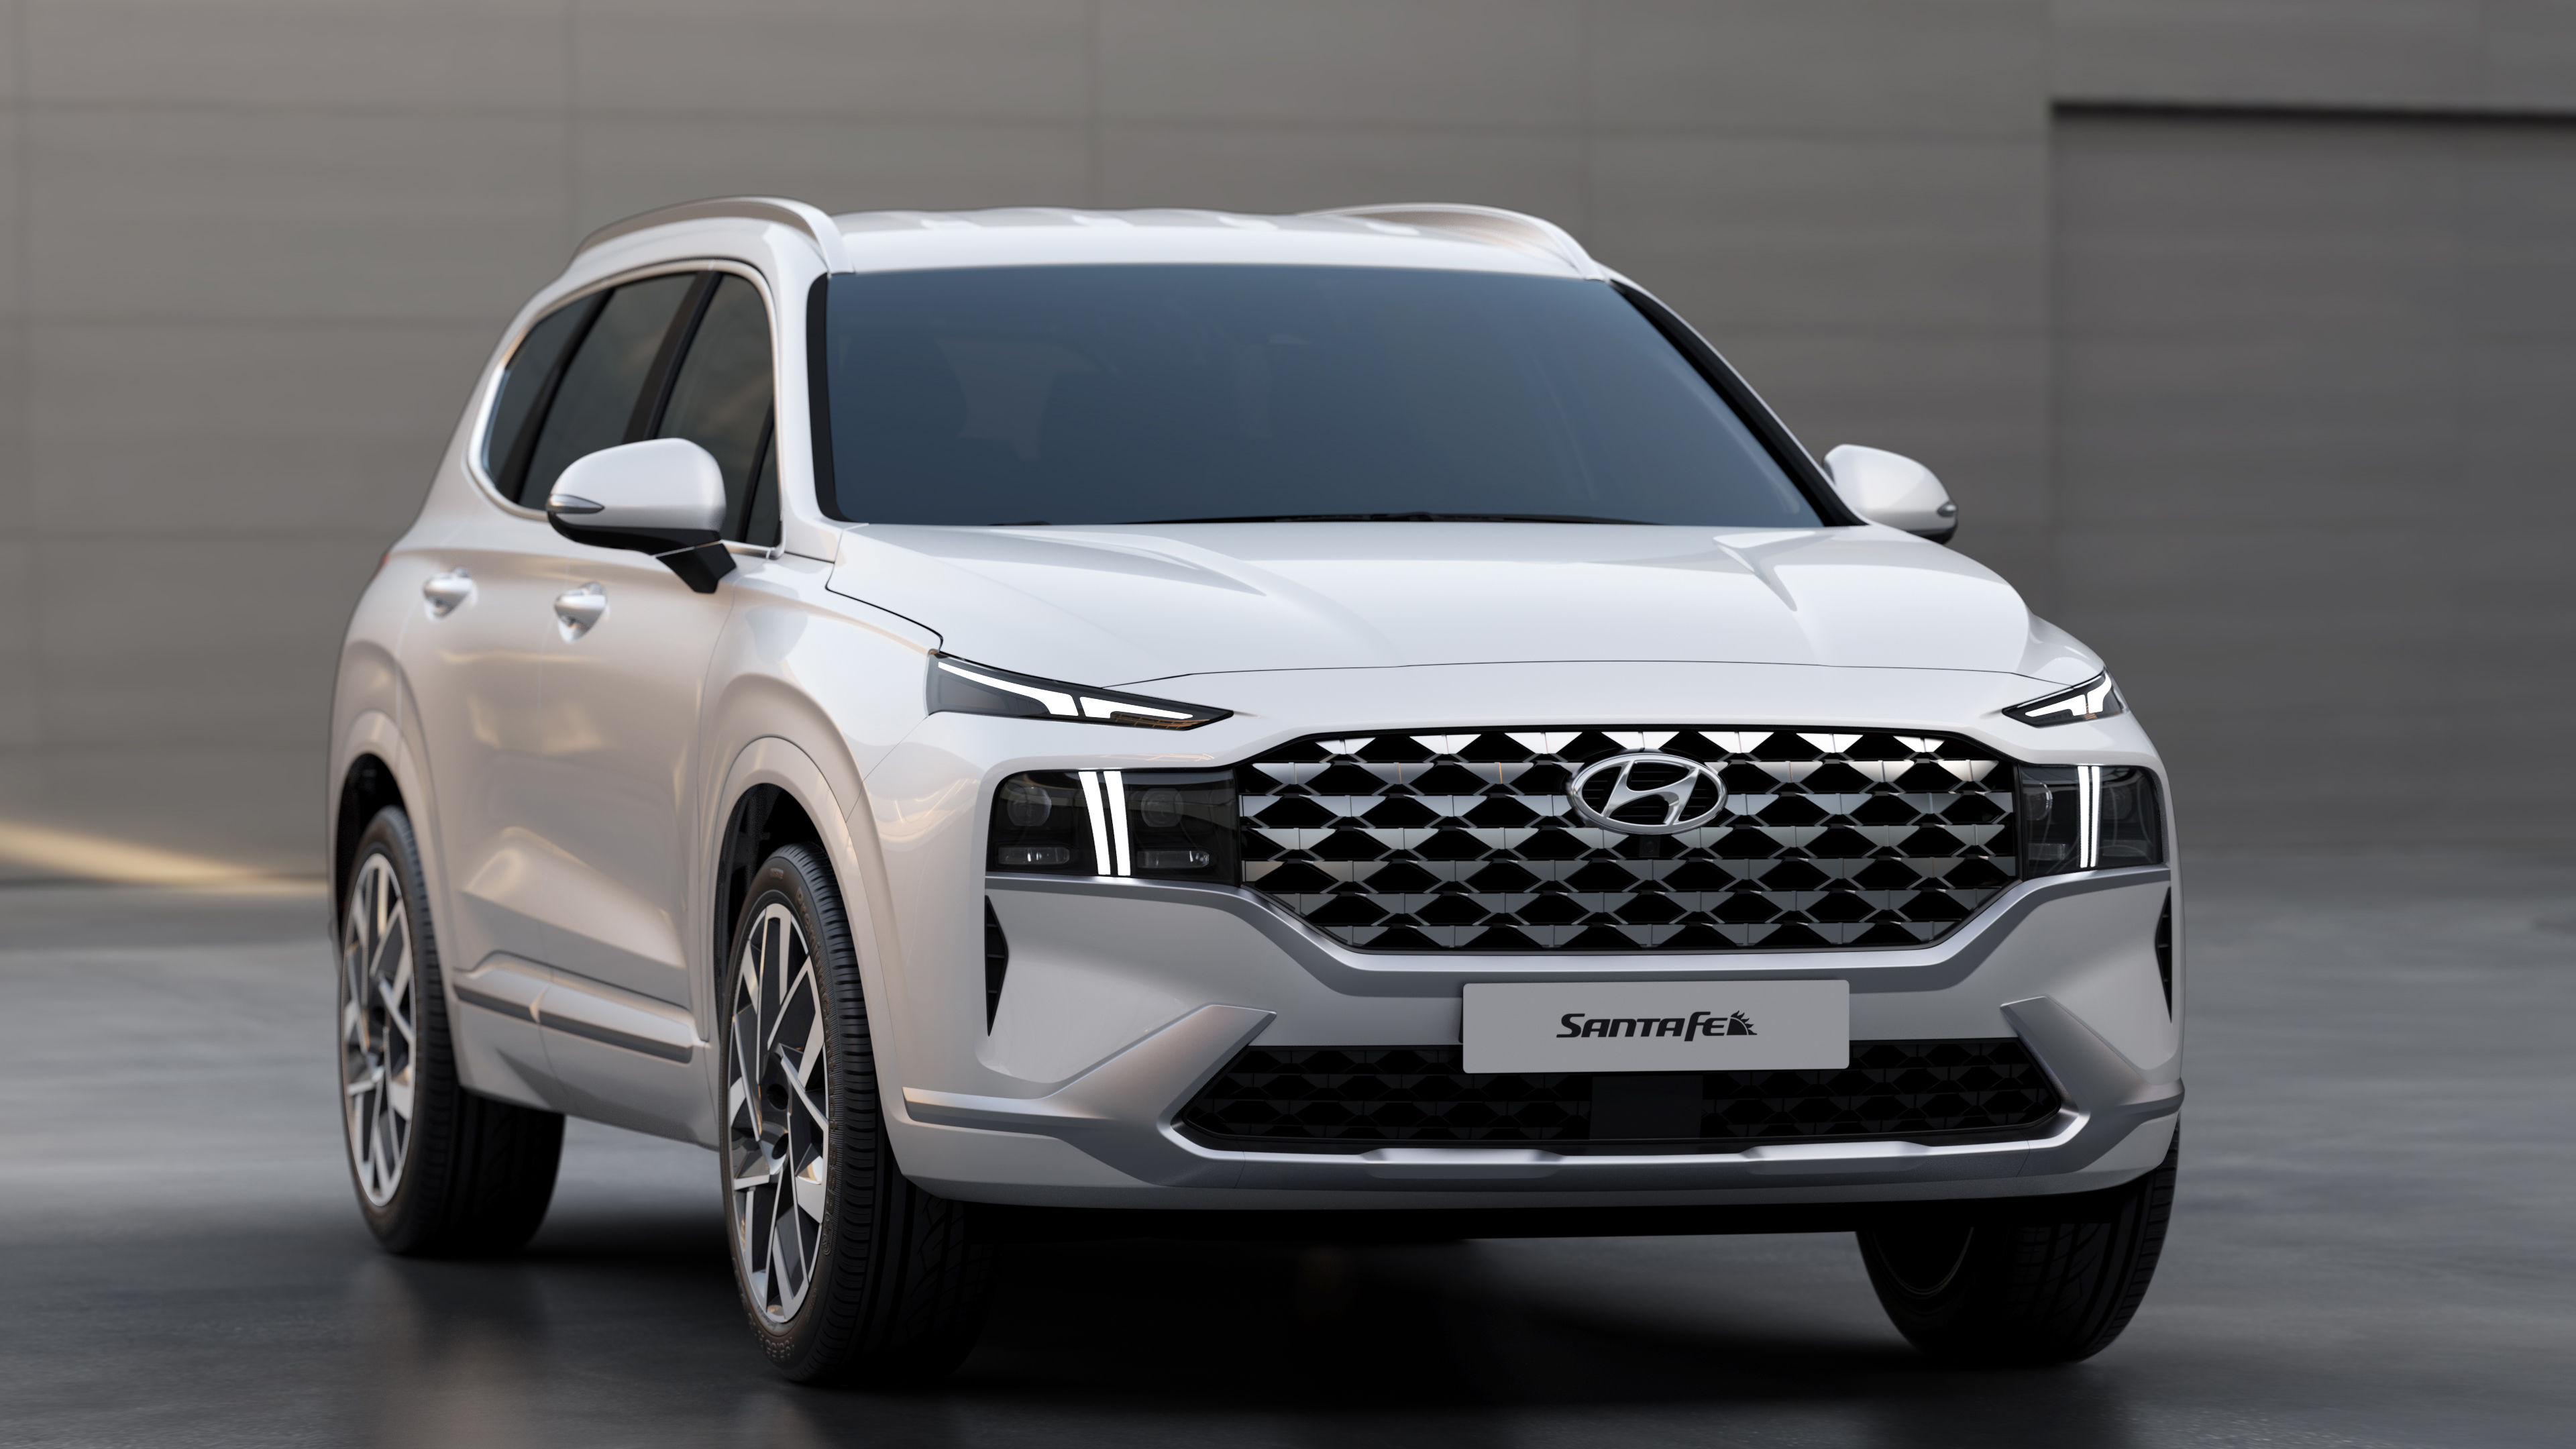 Hyundai Motor Unveils Design of New Santa Fe SUV, the Ultimate Family Adventure Vehicle